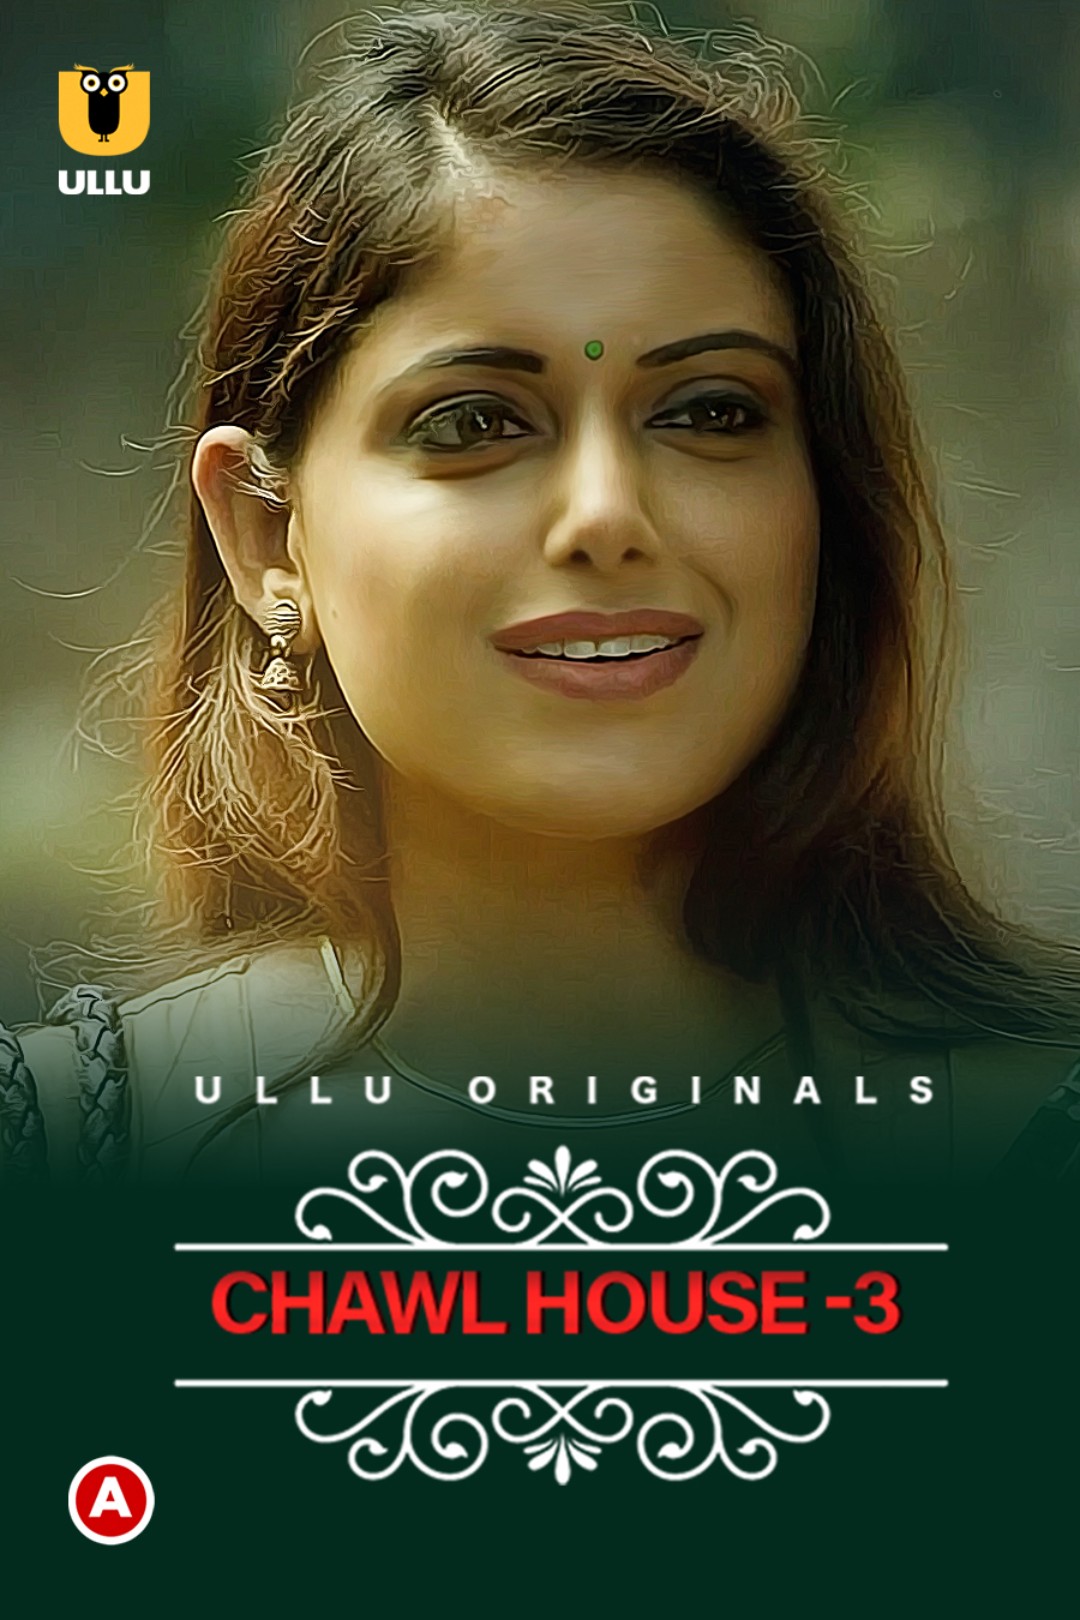 Charmsukh (Chawl House 3) (2022) 1080p HDRip Ullu Hindi Web Series [1.1GB]